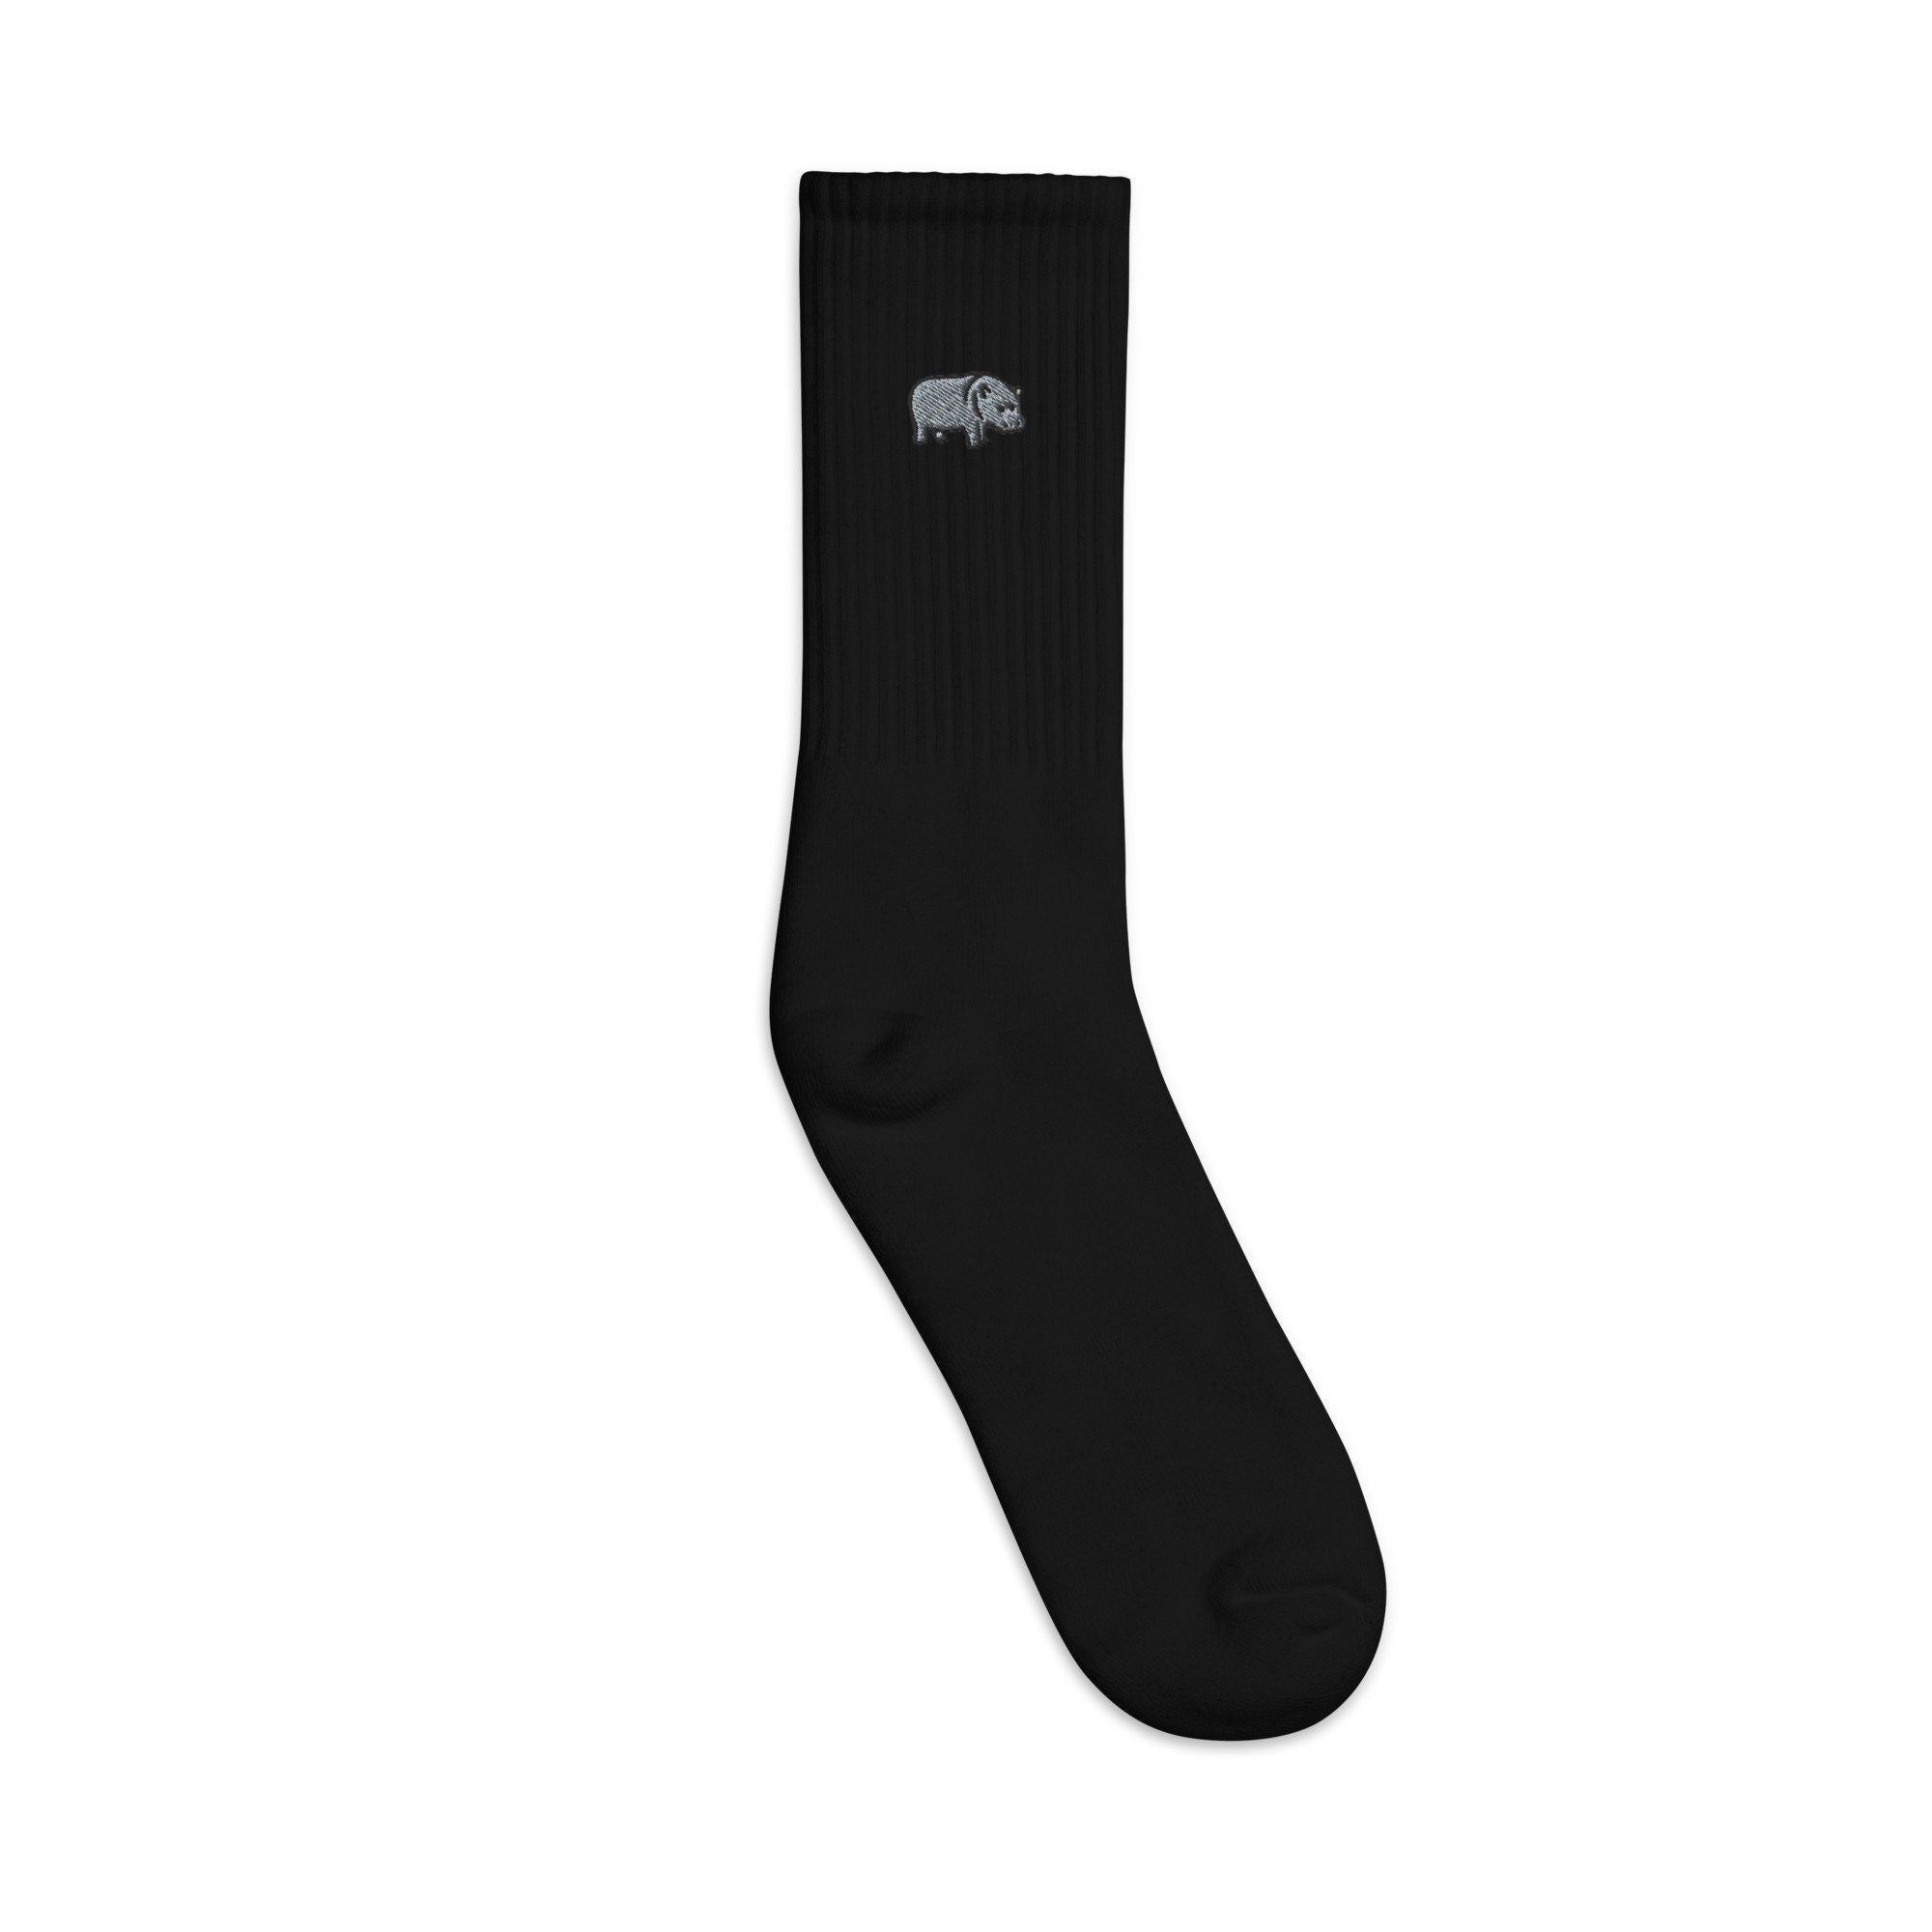 Hippo Embroidered Socks, Premium Embroidered Socks, Long Socks Gift - Multiple Colors